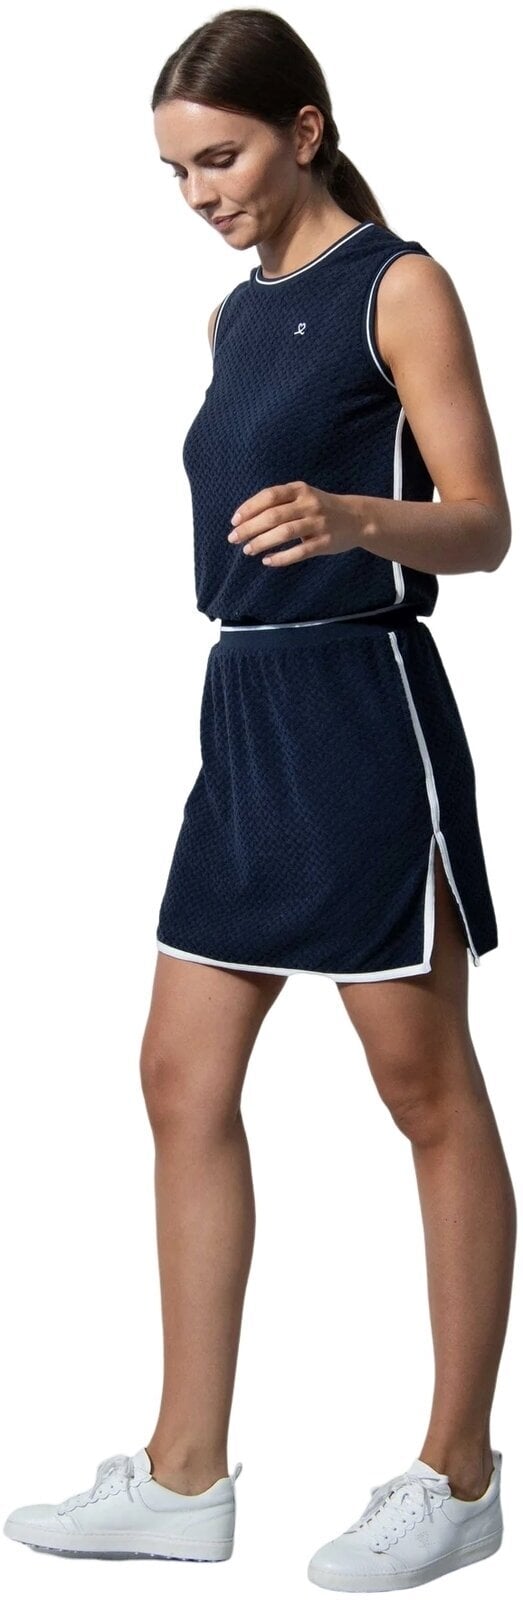 Skirt / Dress Daily Sports Brisbane Sleeveless Dress Navy S